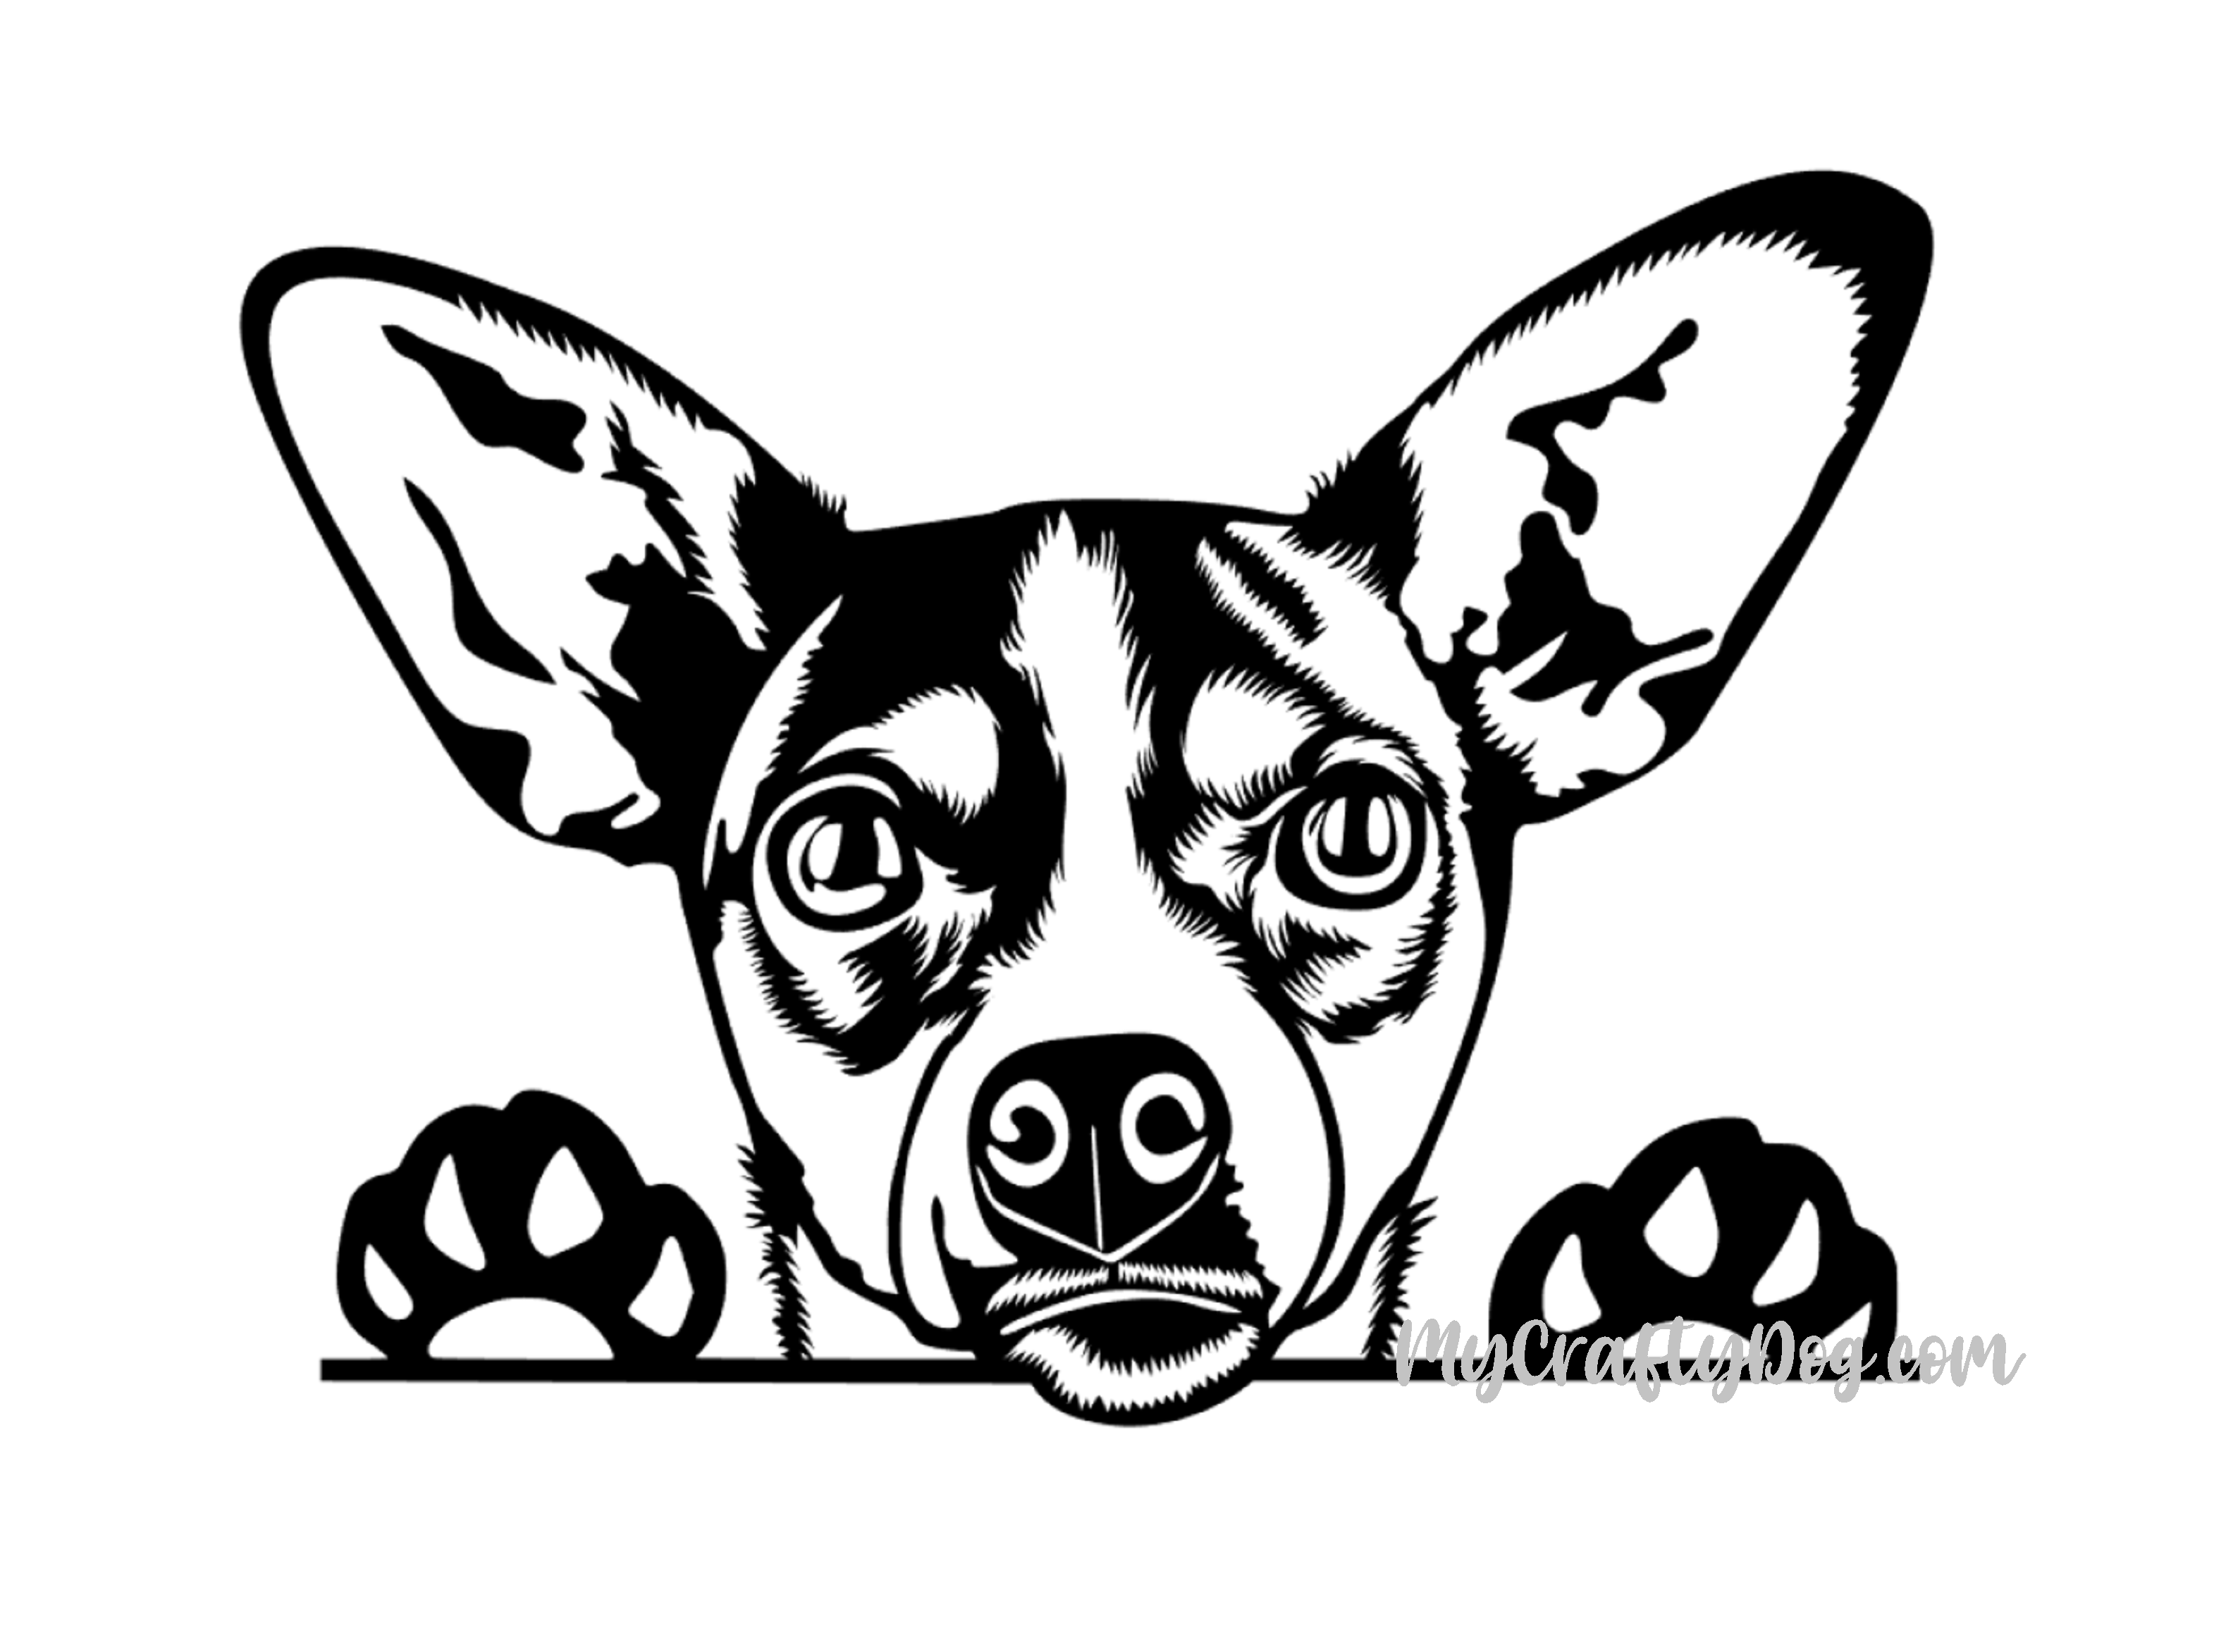 Peeking American Rat Terrier Car Sticker - My Crafty Dog